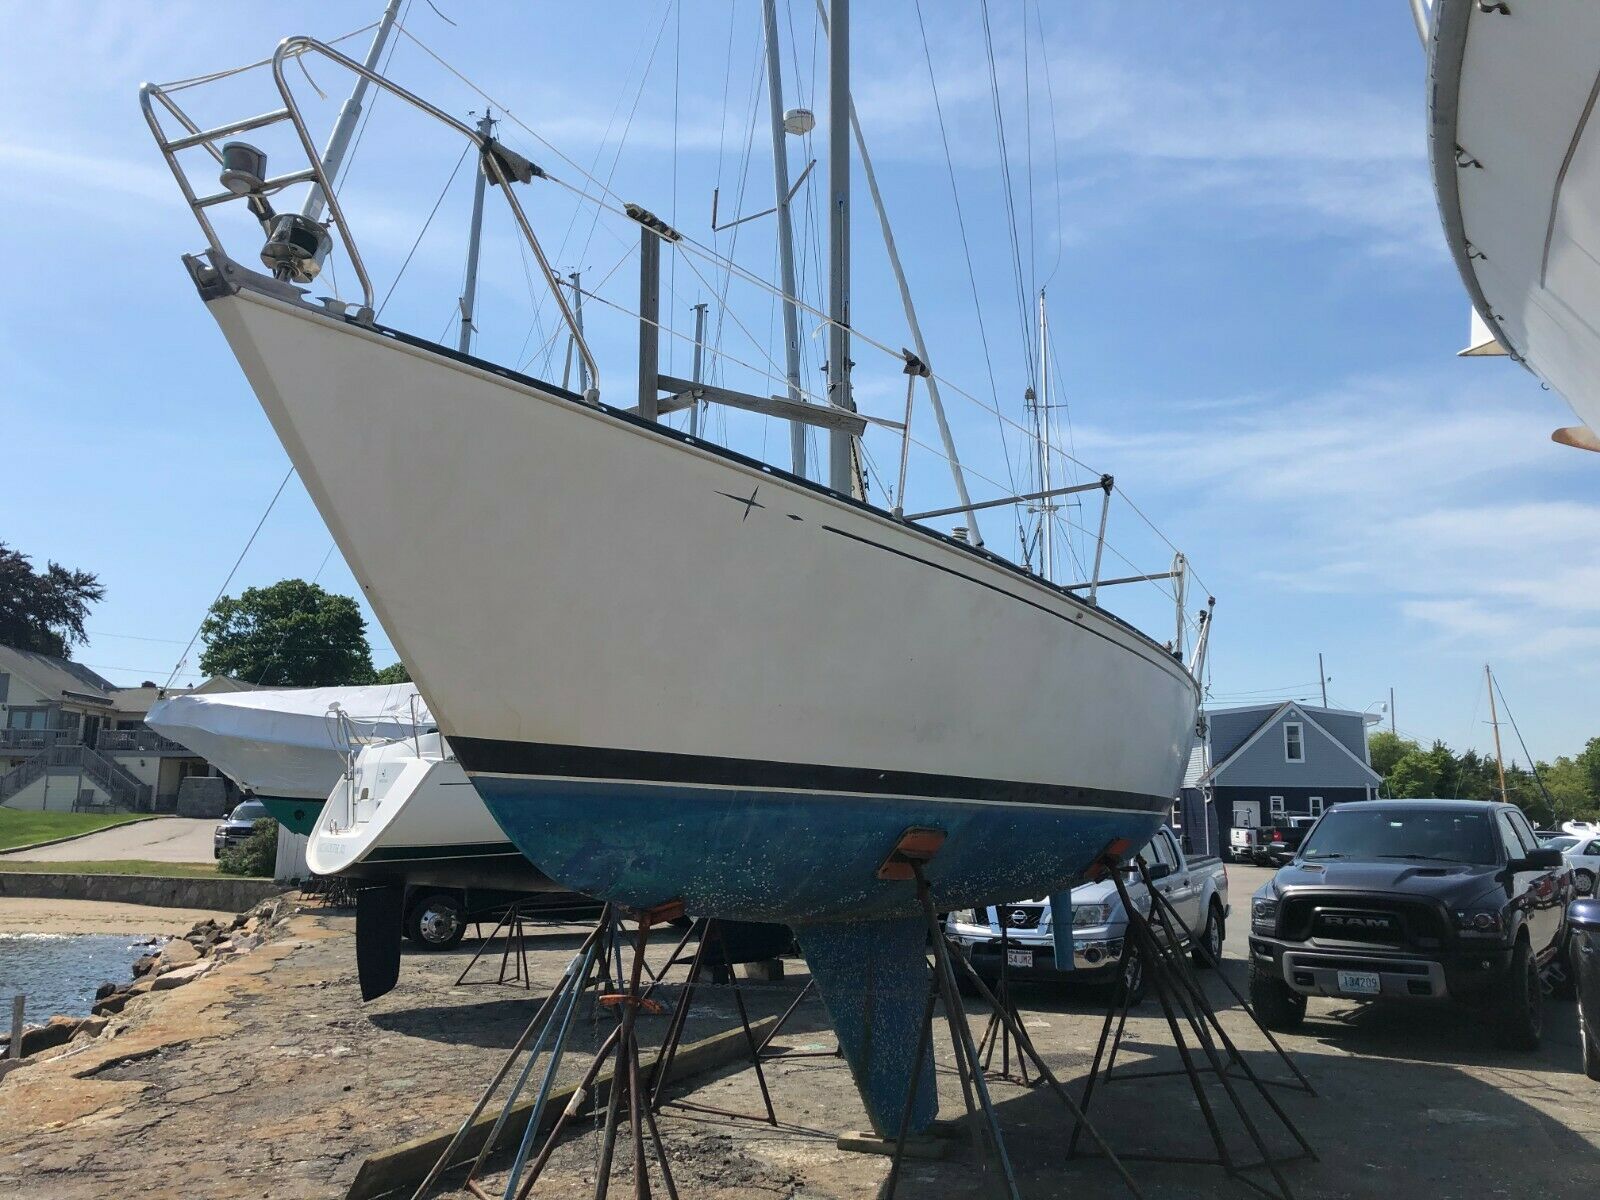 1980 C&c 31.4' Sailboat - New Jersey